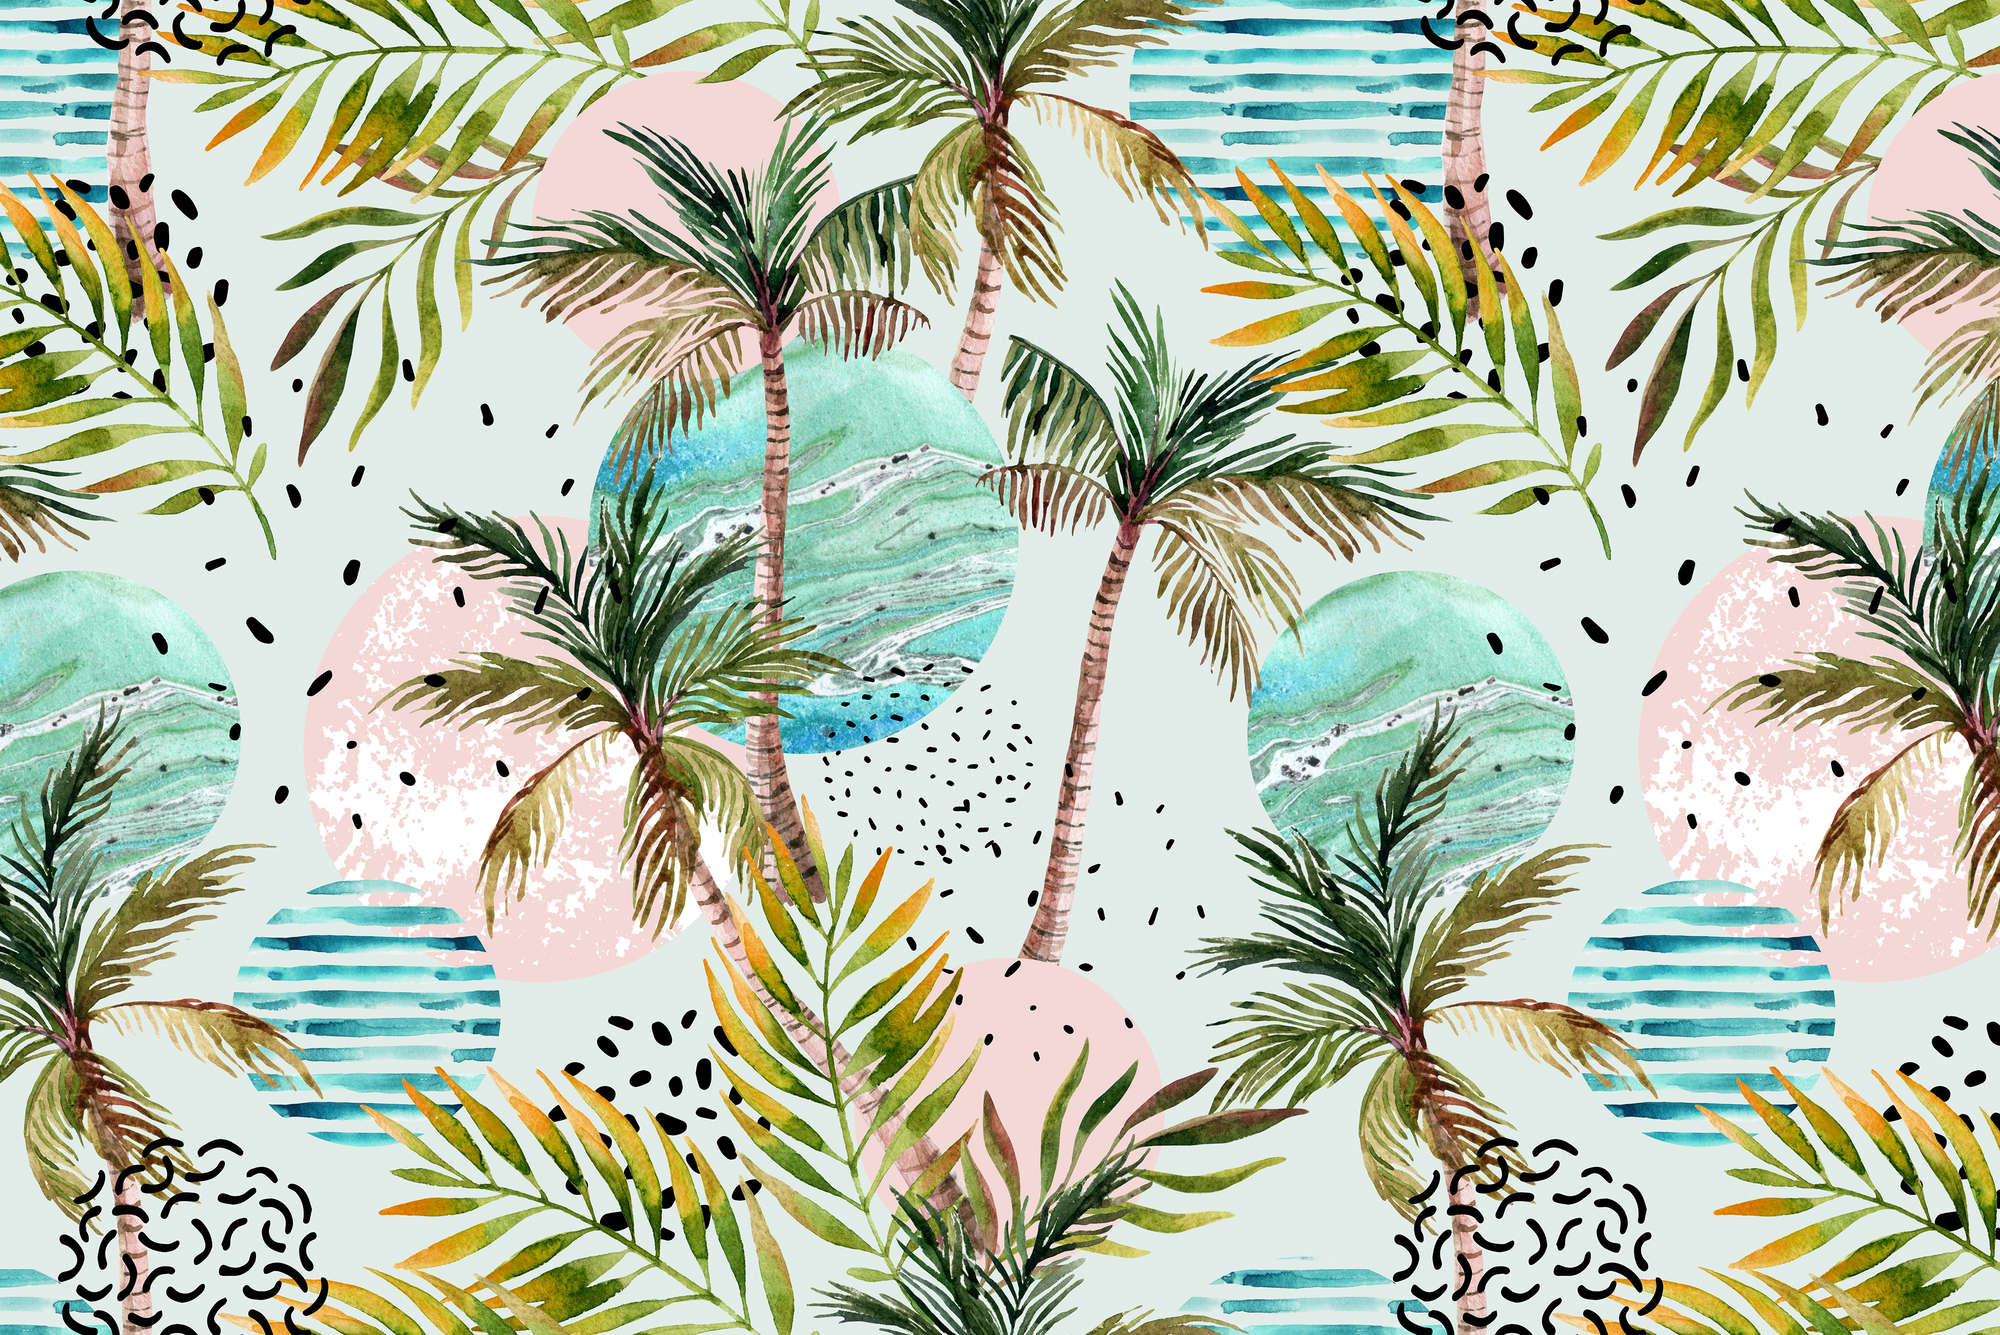             Grafisch behang palmbomen met golfsymbolen op parelmoer glad vlies
        